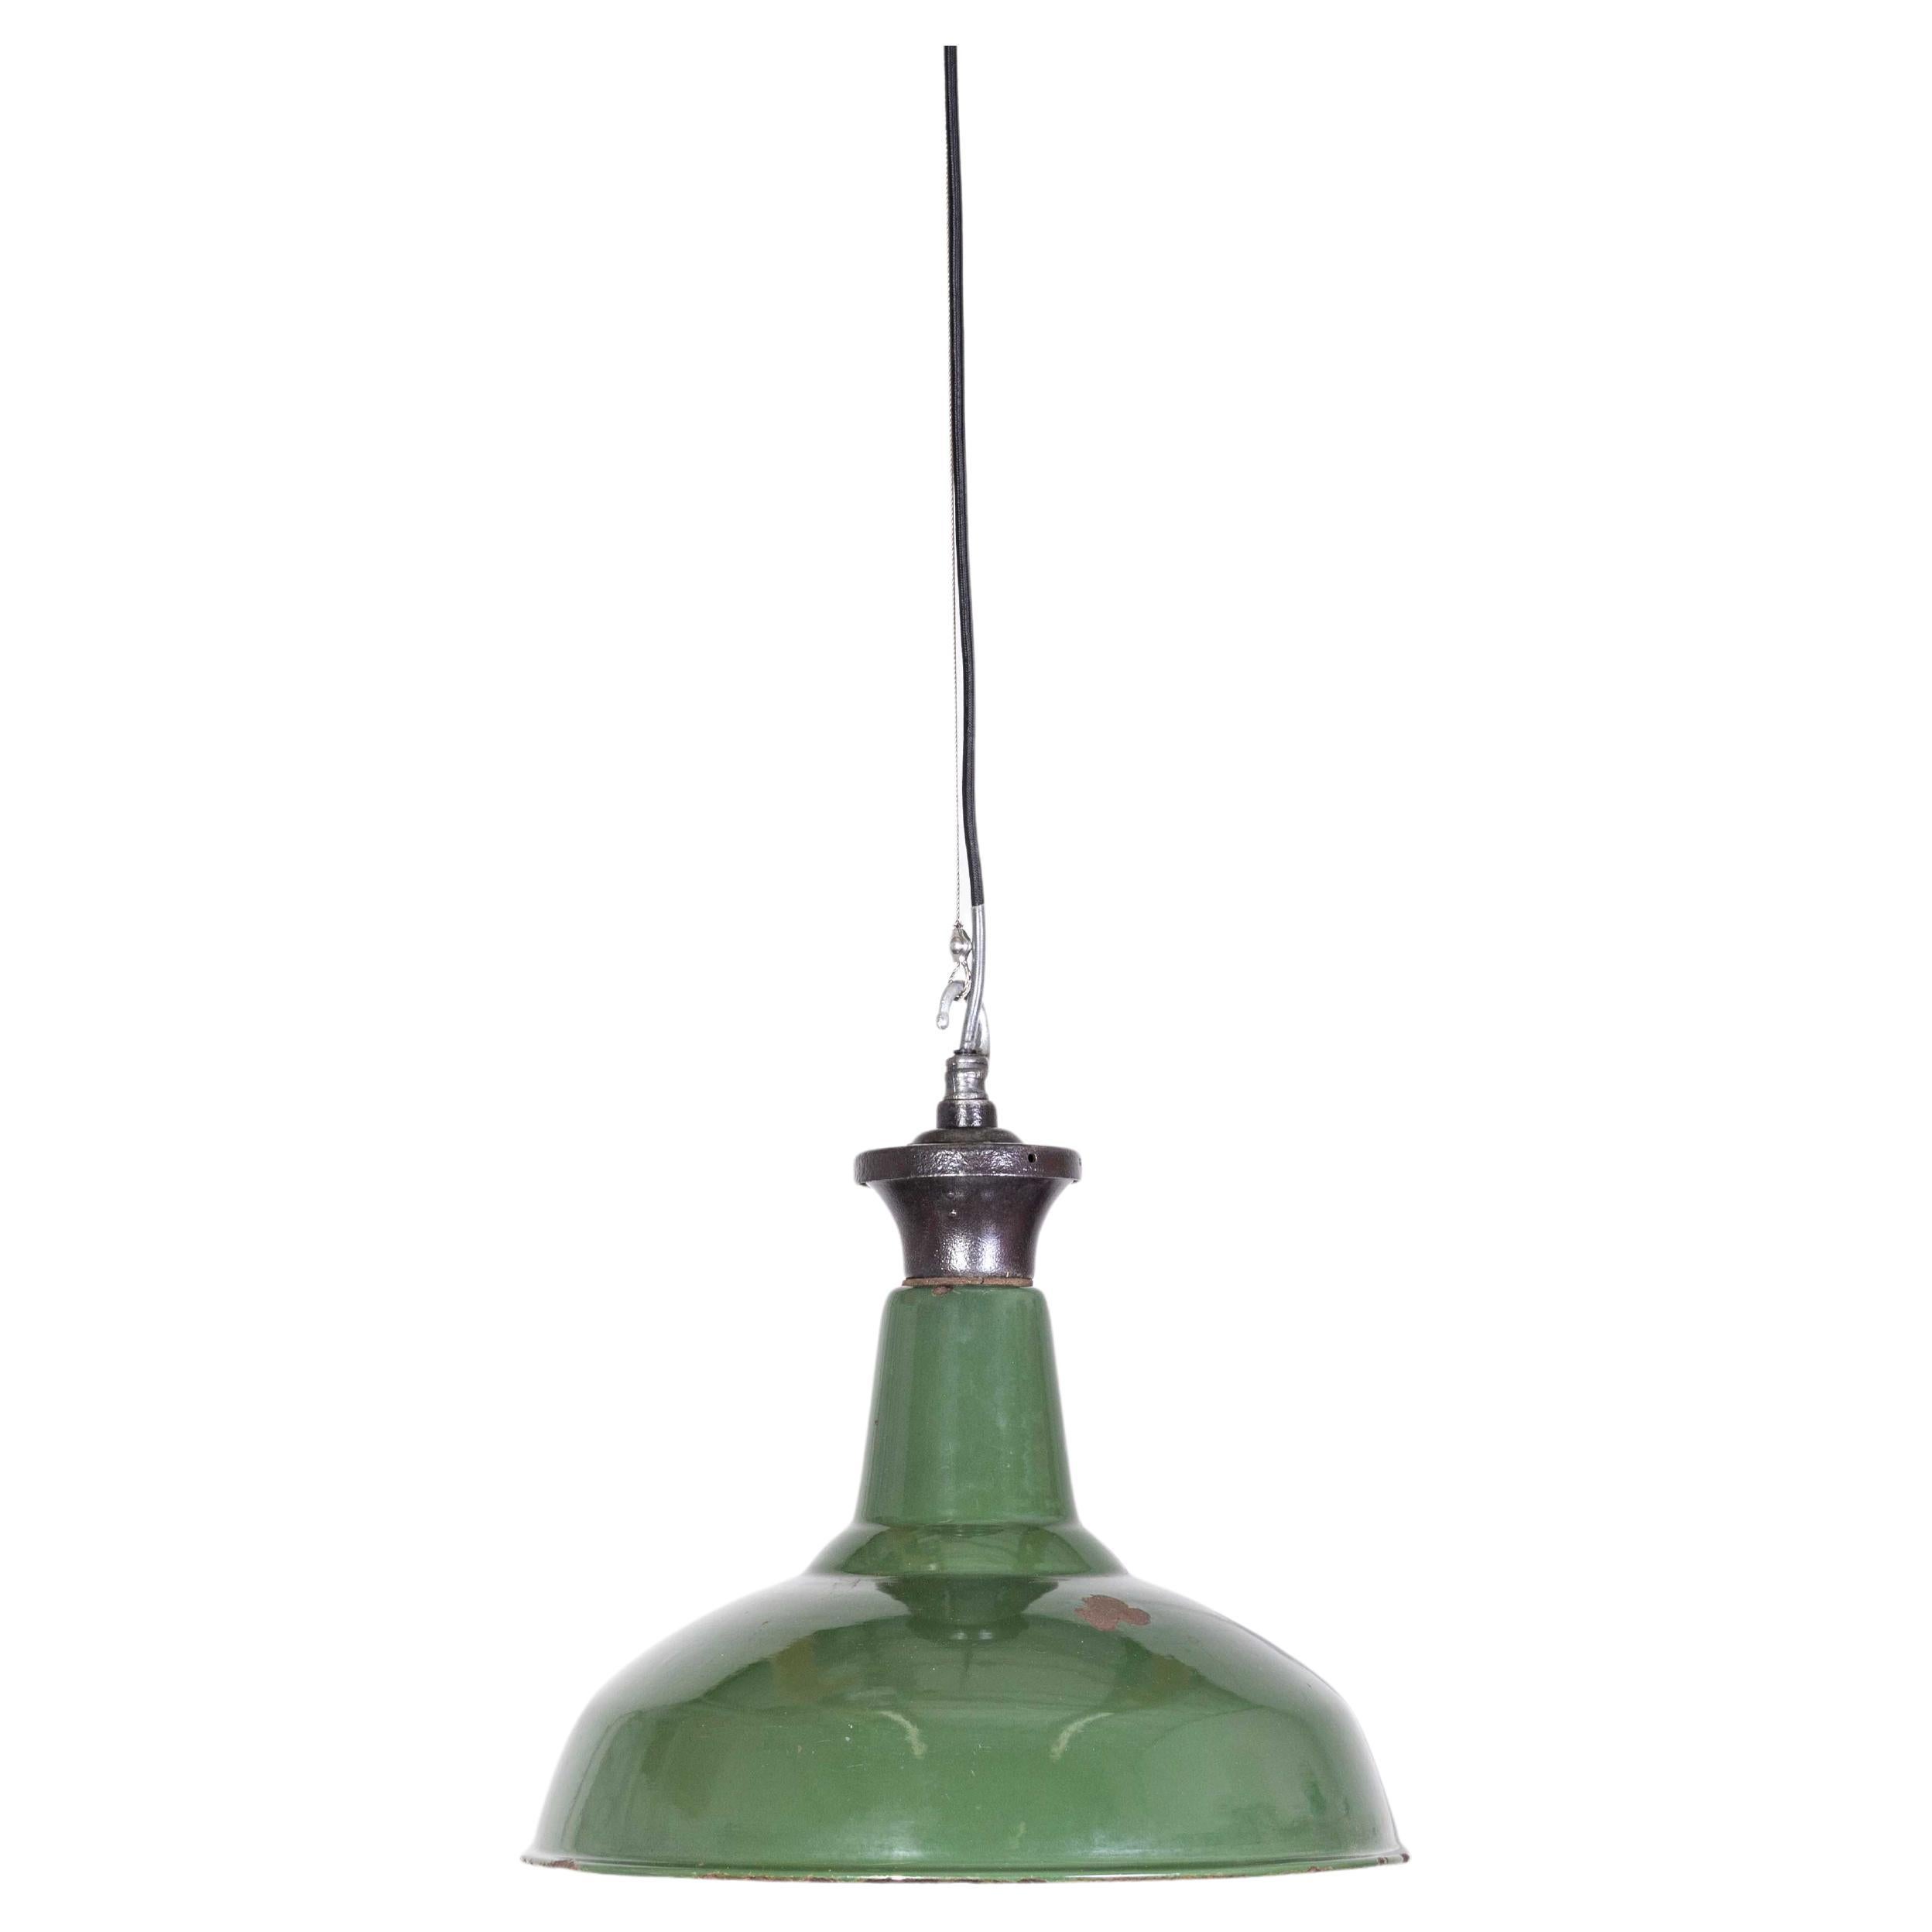 1940's Real Industrial Enamel Green Single Pendant Lamp - 16 Inch